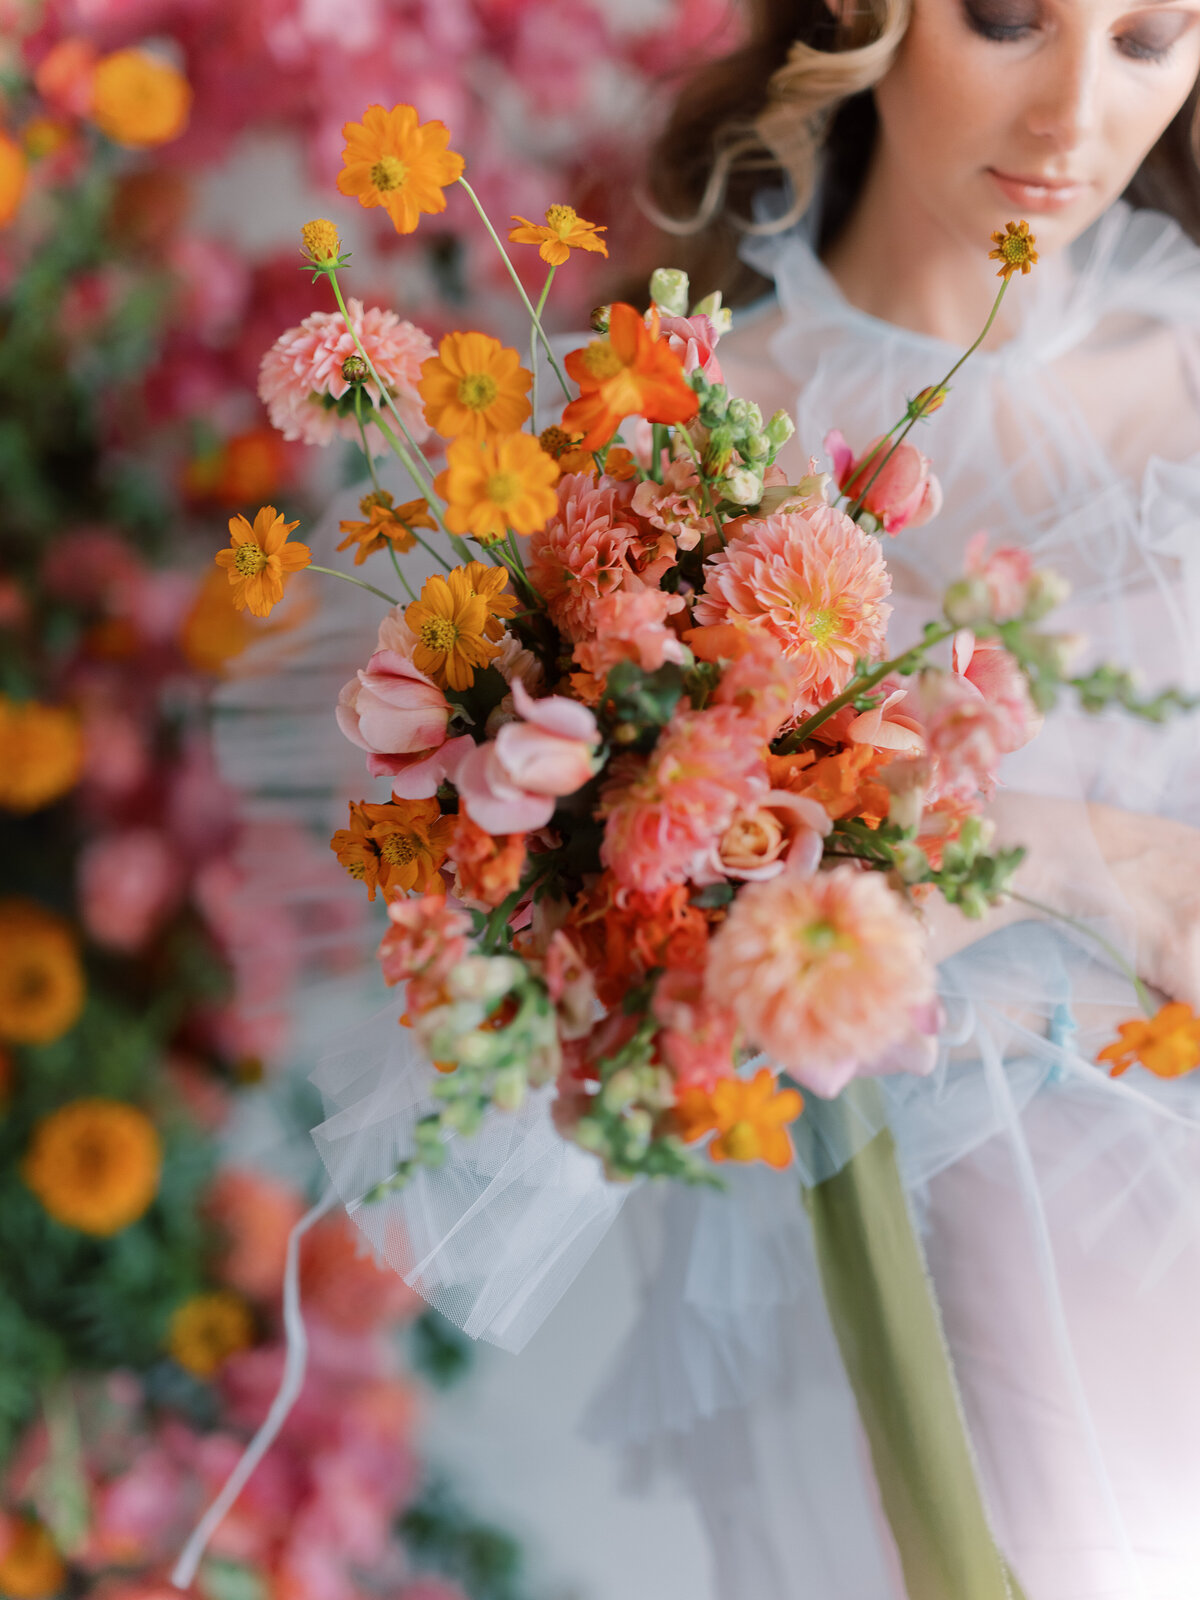 Sarah Rae Floral Designs Wedding Event Florist Flowers Kentucky Chic Whimsical Romantic Weddings19